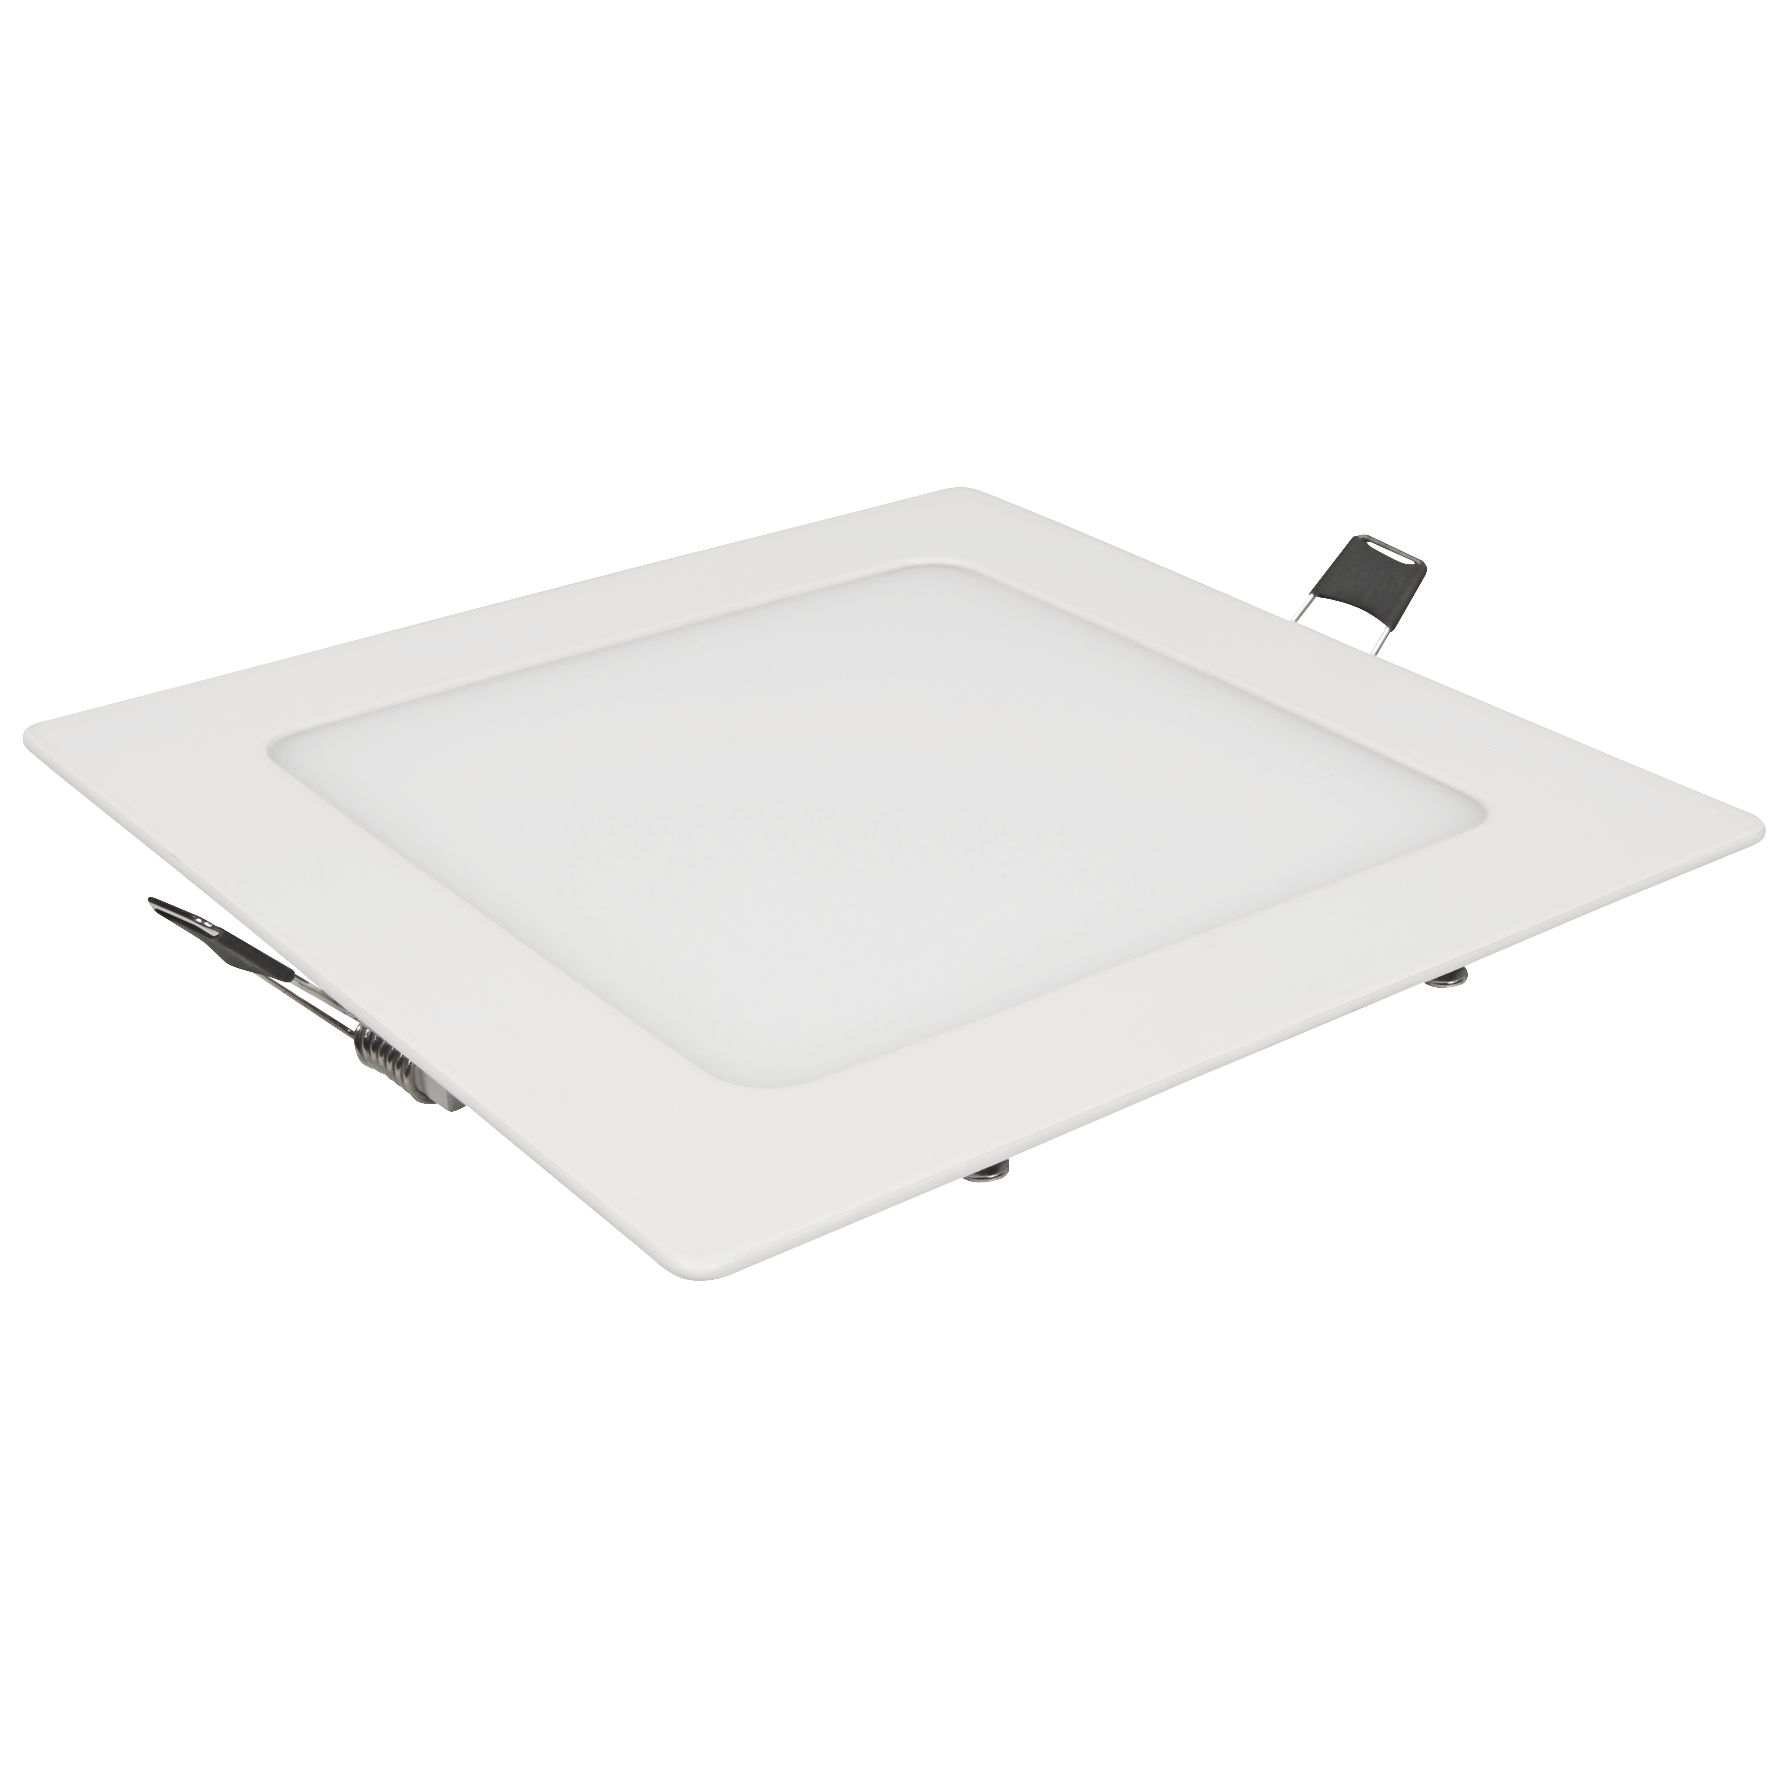 LED-Panel McShine ''LP-1217SW'', 12W, 170x170mm, 1224 lm, 3000K, warmweiß